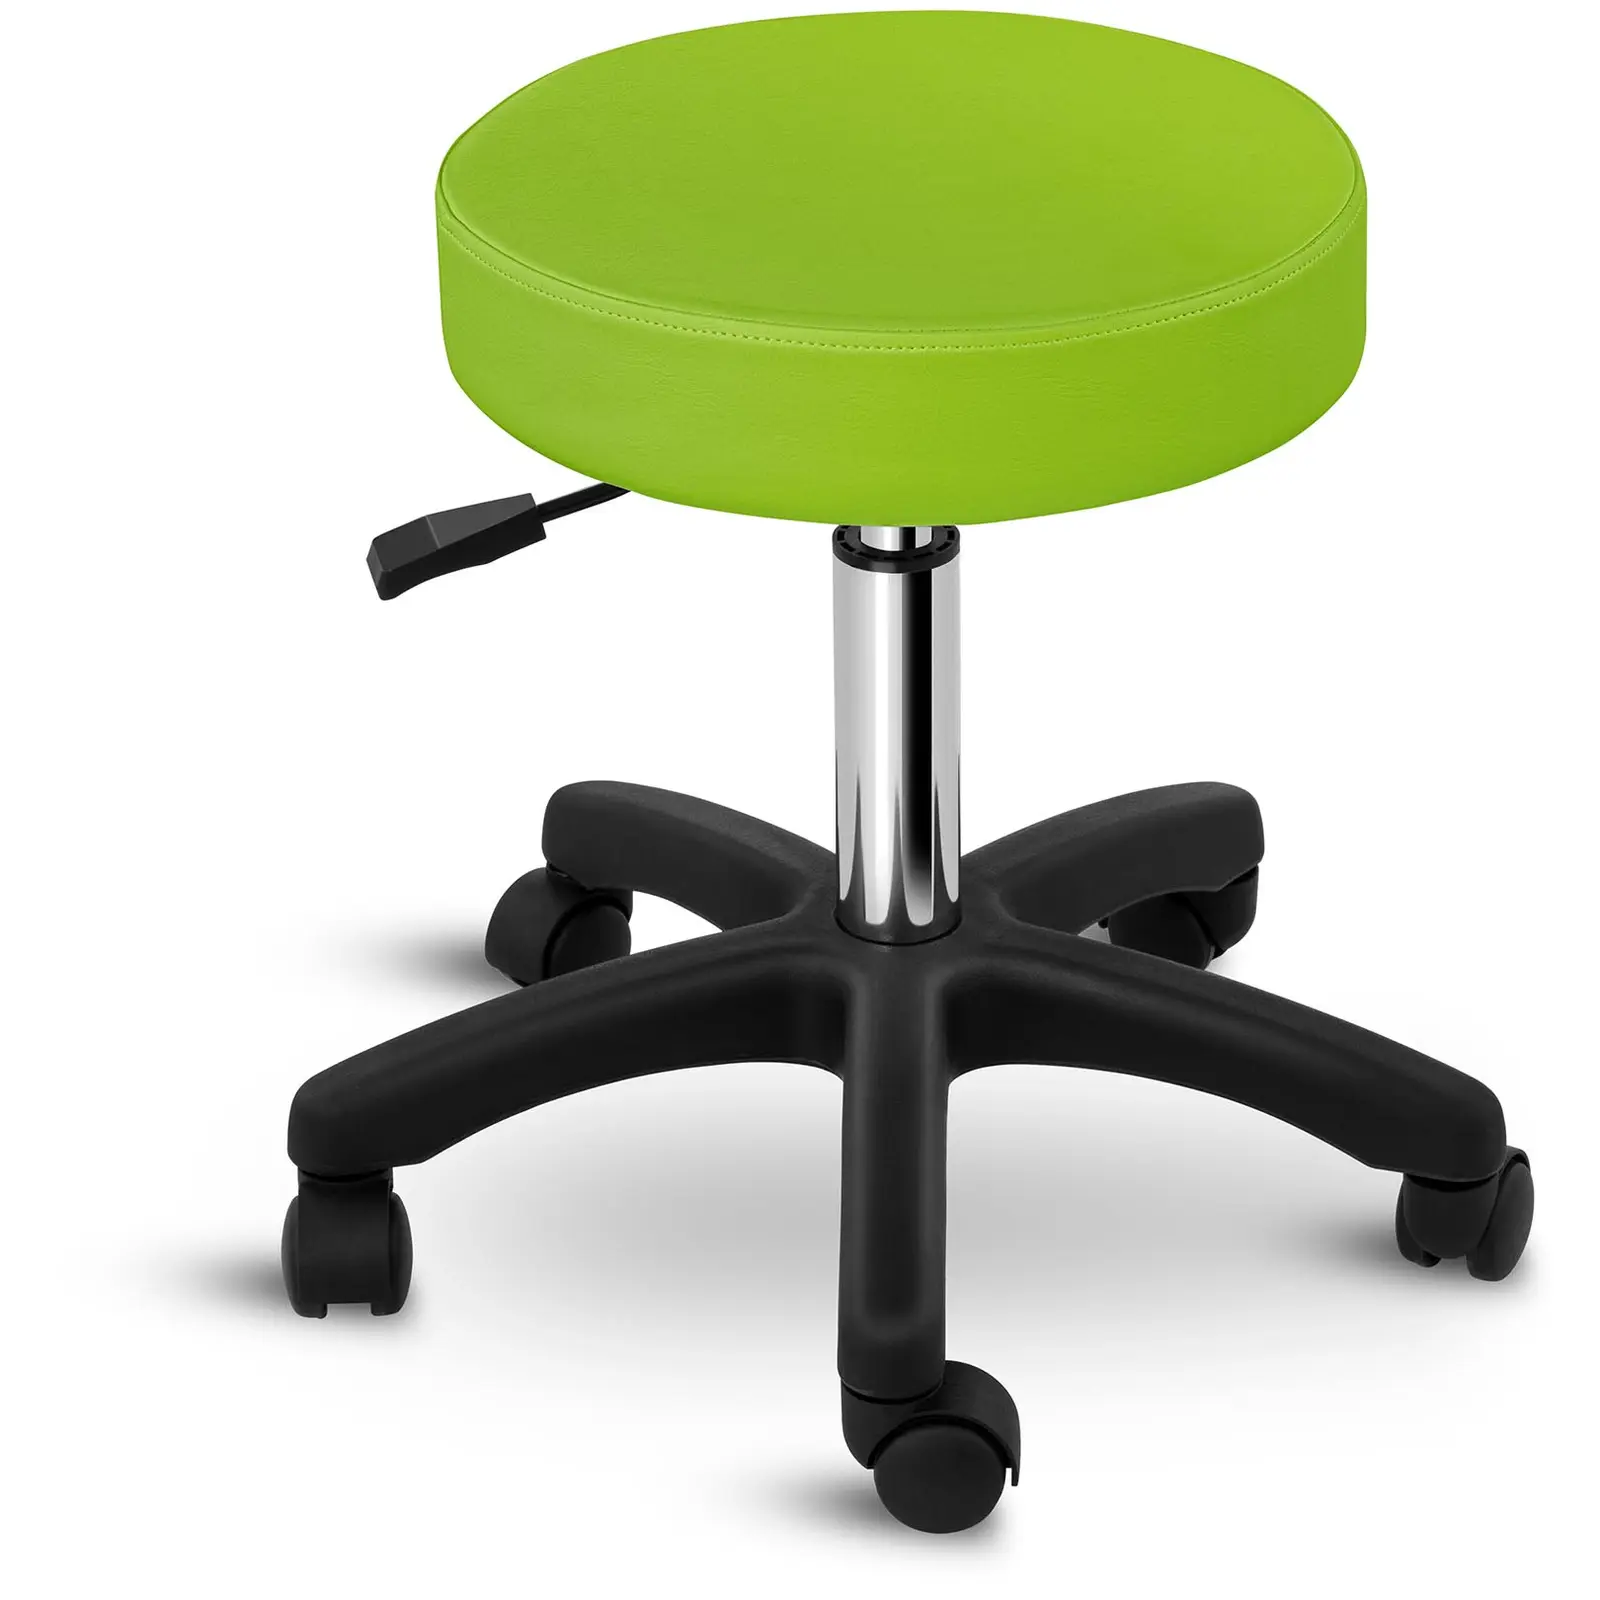 Delovni stolček - 450 - 580 mm - 150 kg - Zelena